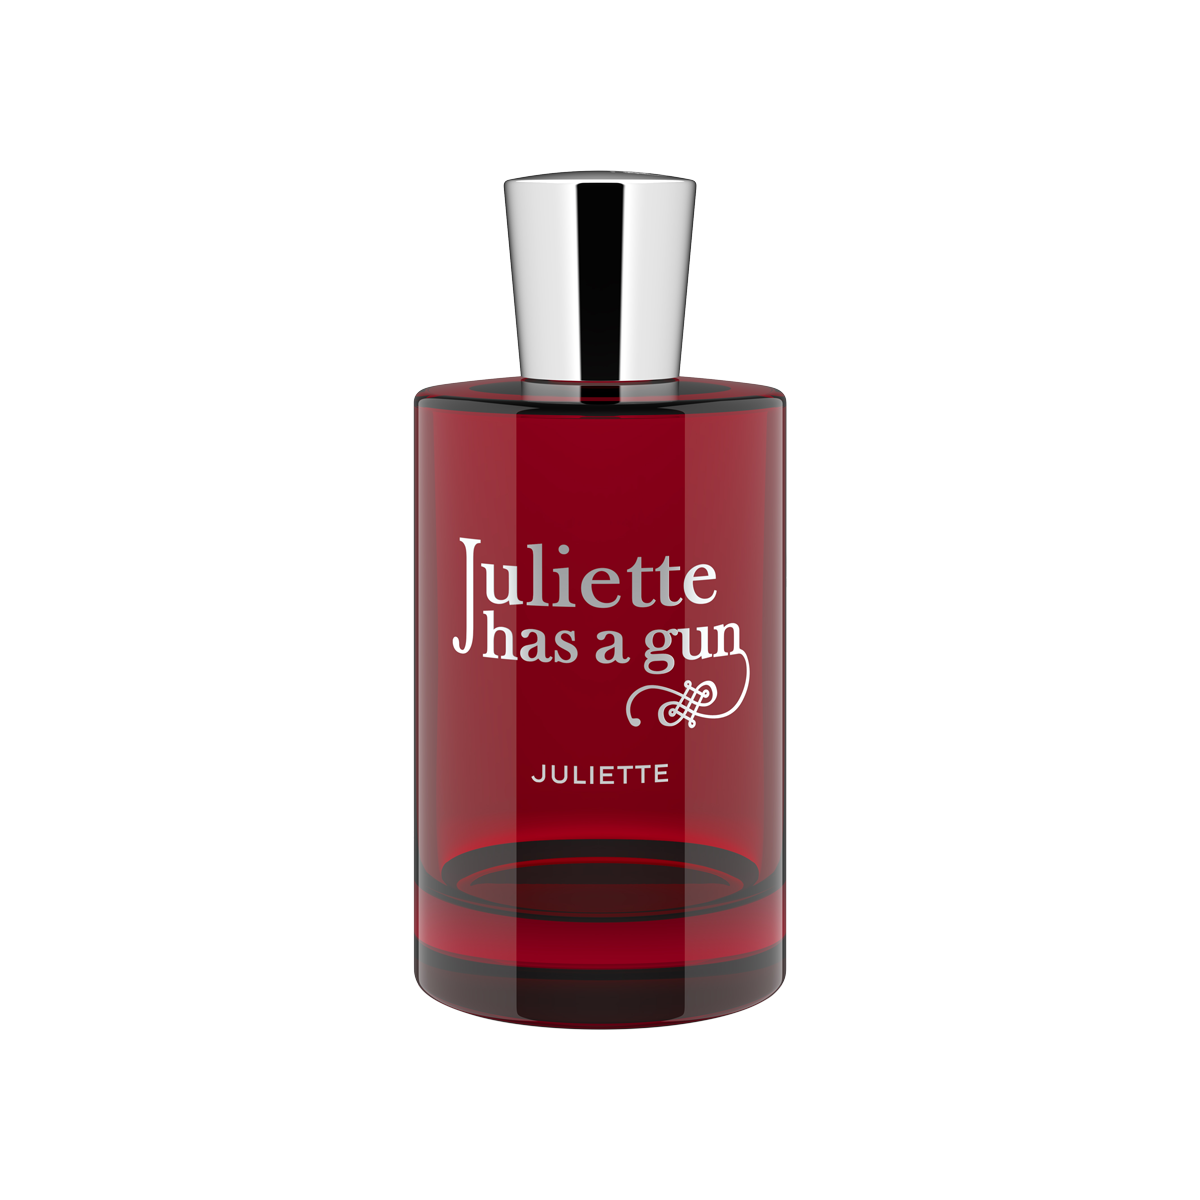 Juliette has a Gun - Juliette Eau de parfum